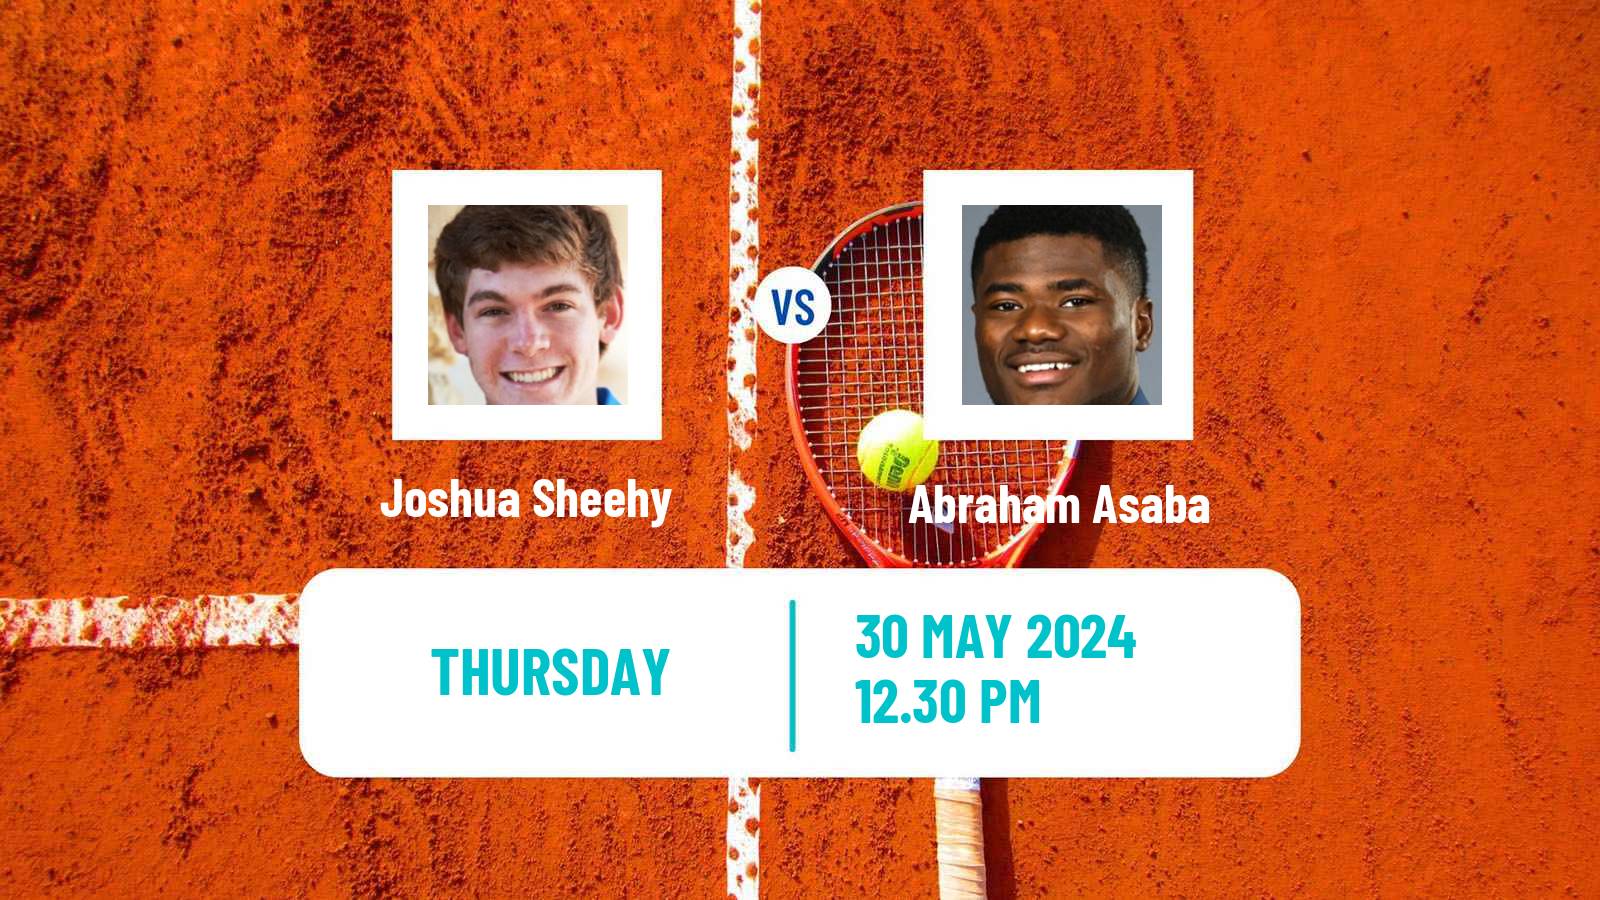 Tennis ITF M15 Kingston 3 Men Joshua Sheehy - Abraham Asaba